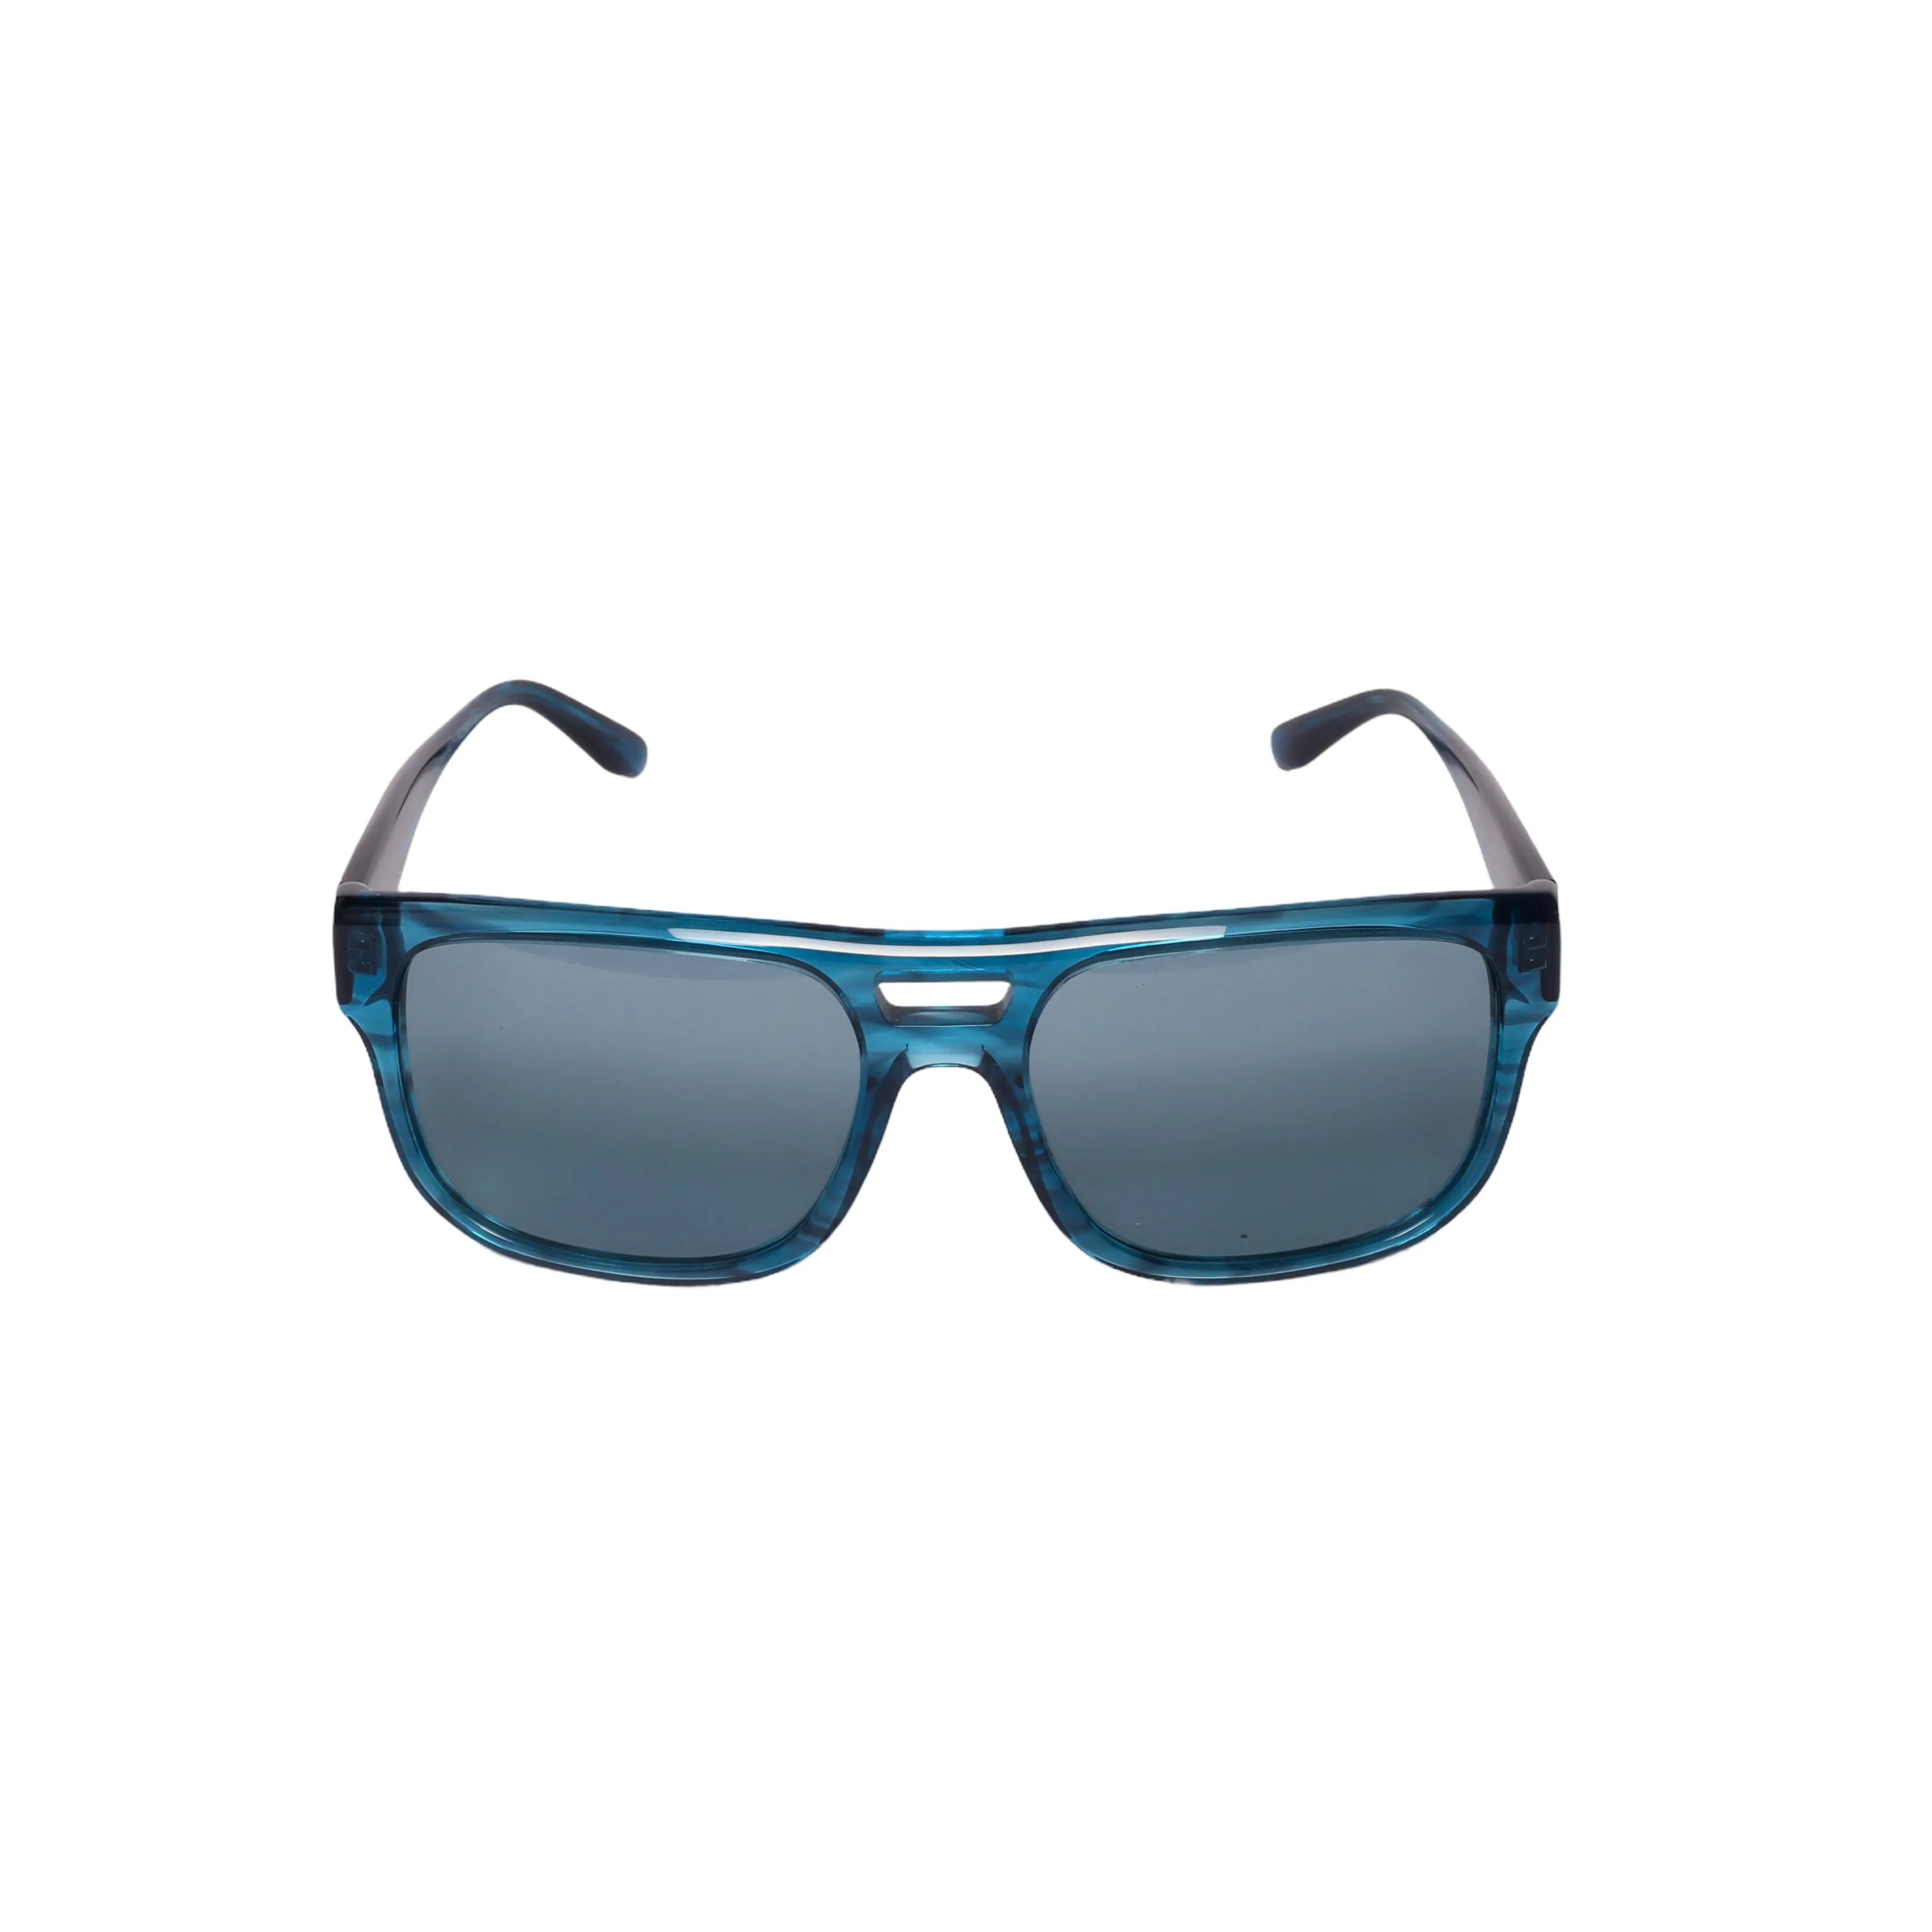 Emporio Armani-EA 4197-57-5311 Sunglasses - Premium Sunglasses from Emporio Armani - Just Rs. 11890! Shop now at Laxmi Opticians